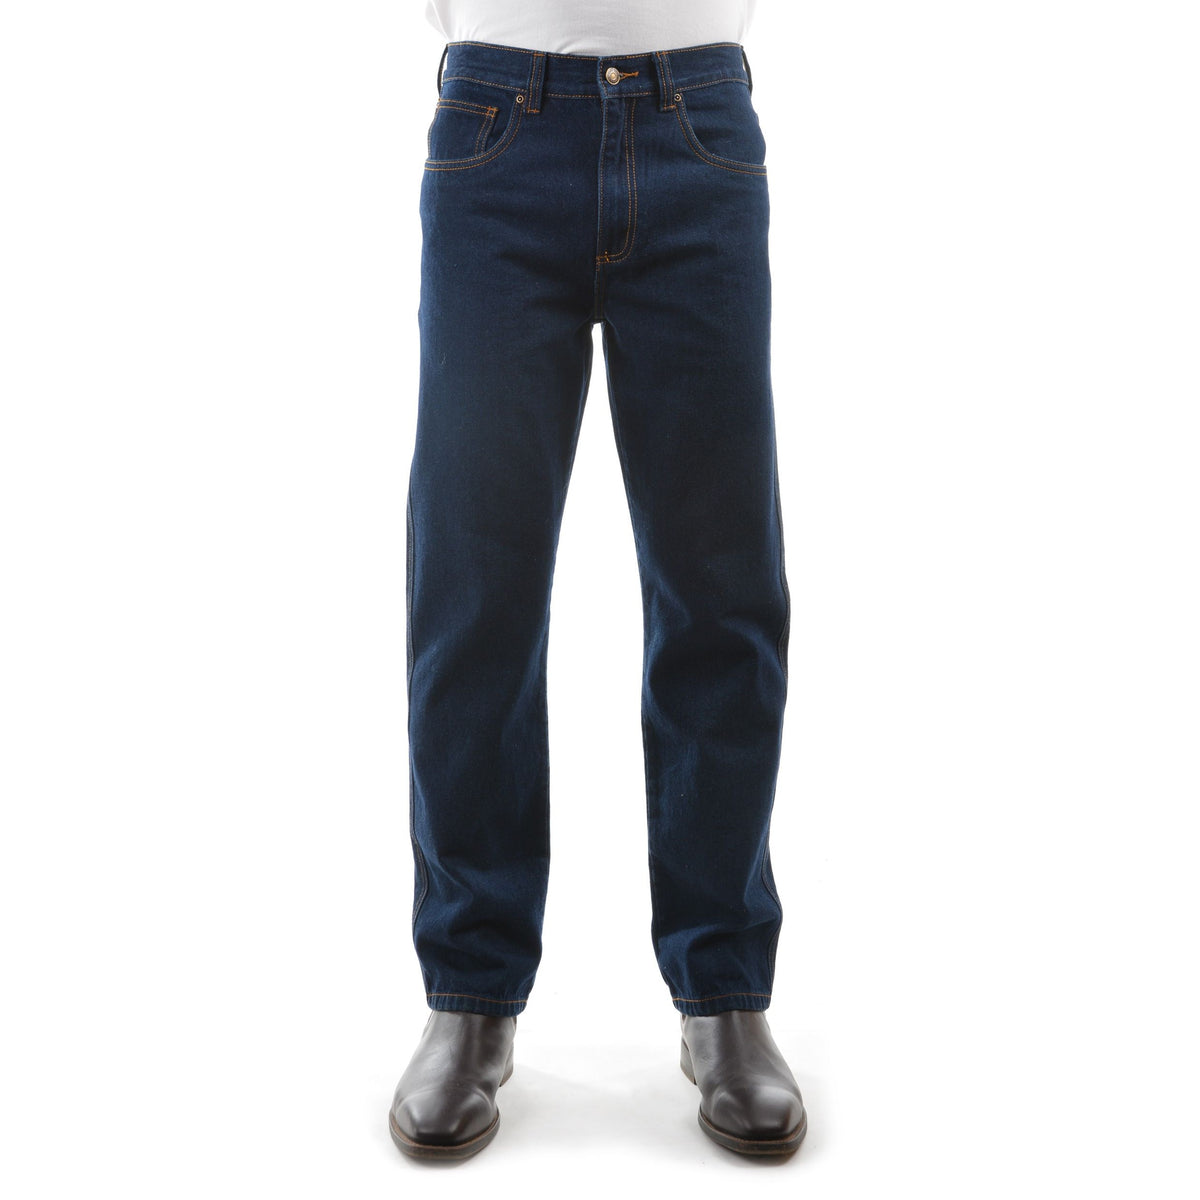 Hard Slog Men's Rigid Denim Jeans (30 Inch Leg) Dark Denim Front